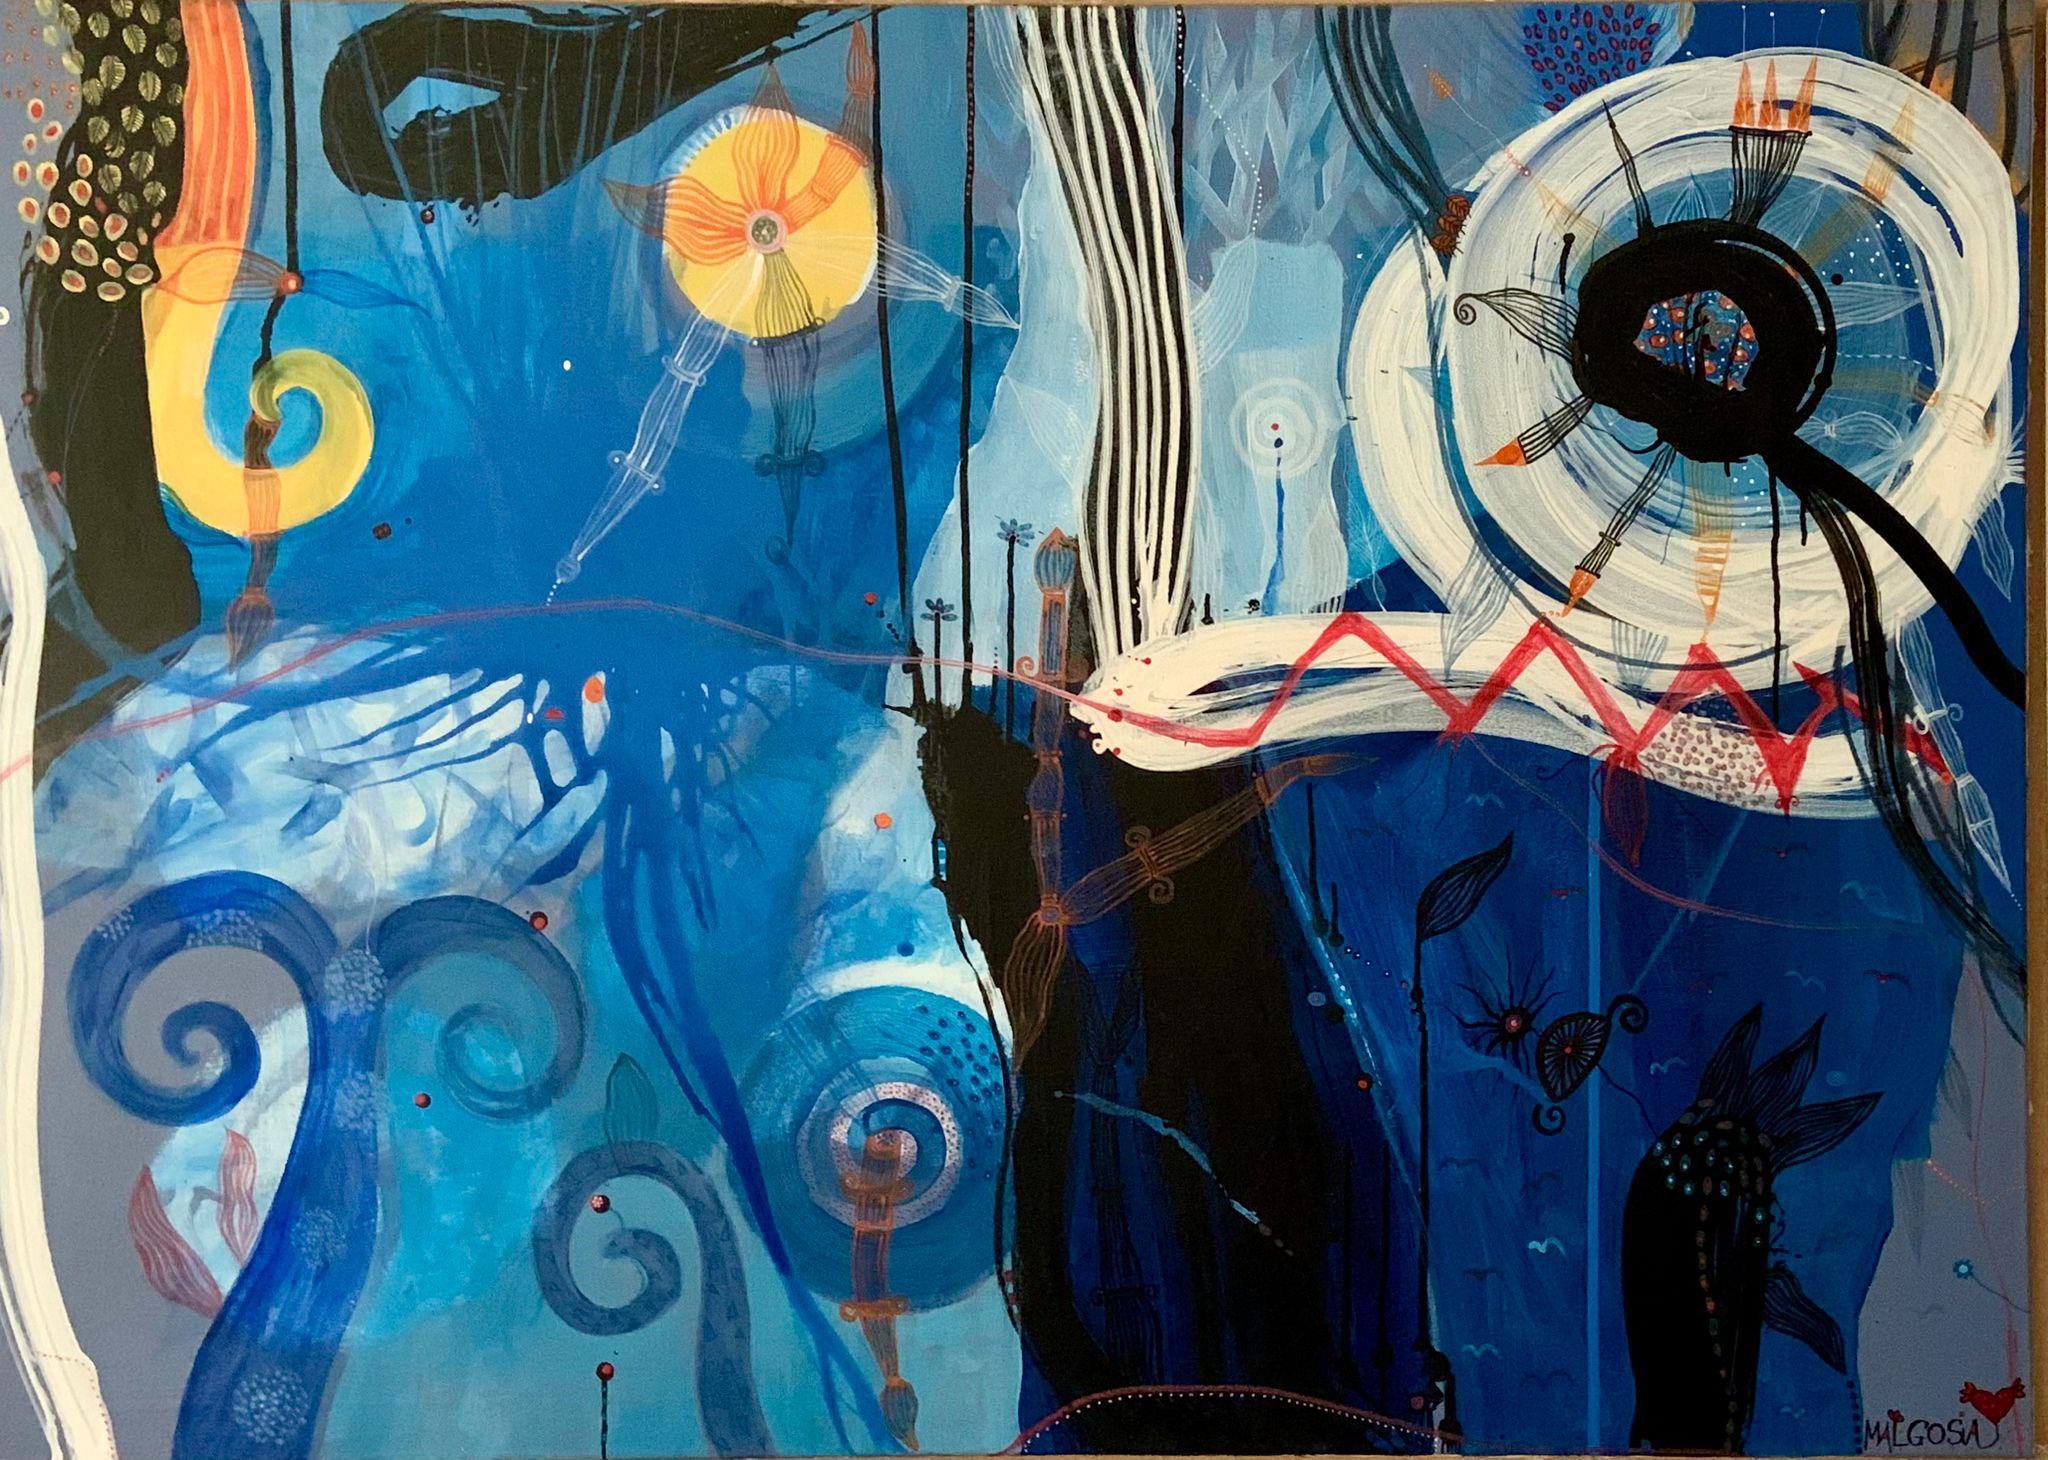 Malgosia Kiernozycka Abstract Painting - Walking On The Moon Abstract Expressionist